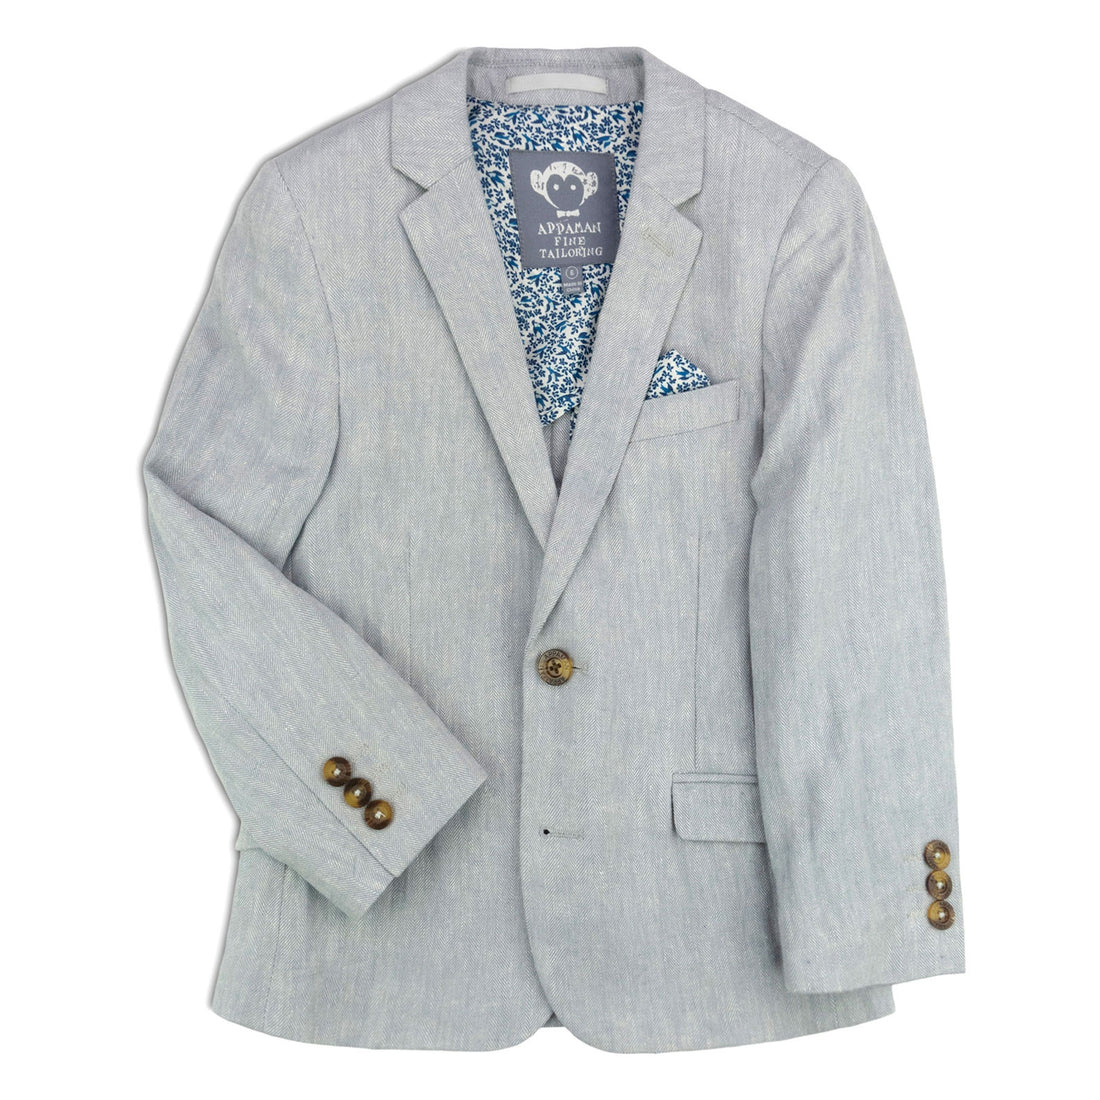 Appaman Grey Herringbone Sports Jacket